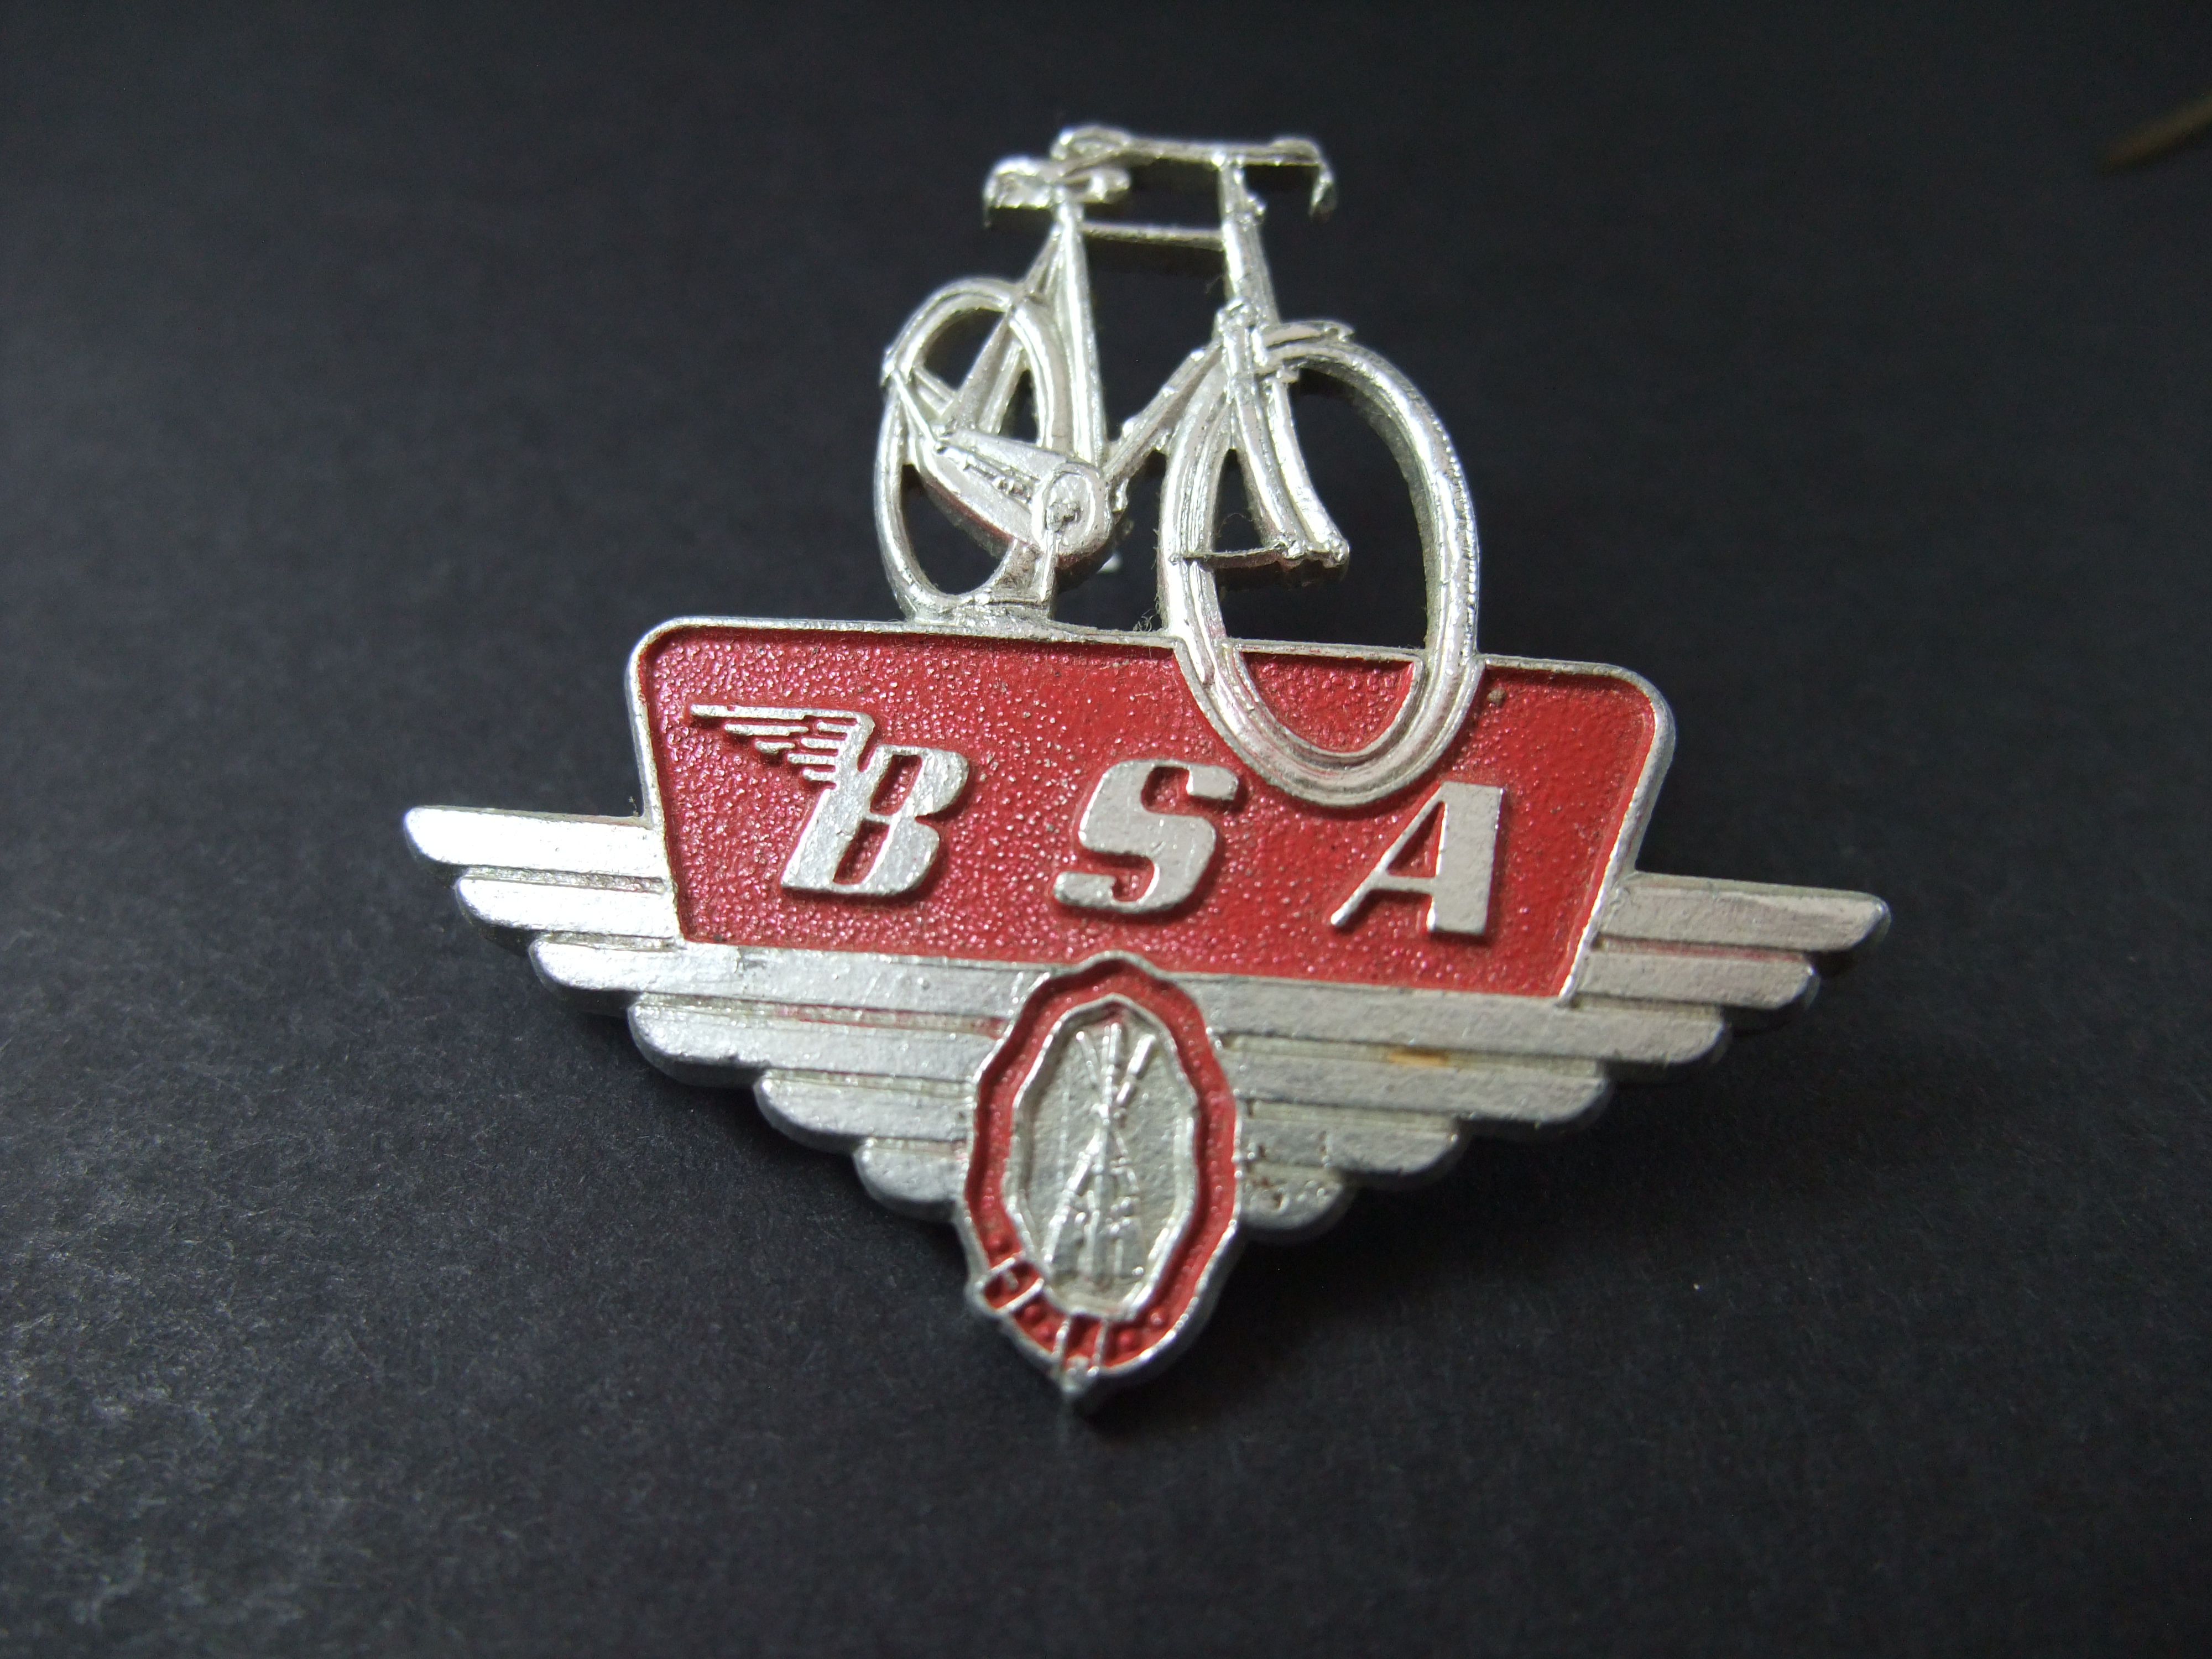 BSA  ( Birmingham Small Arms )Engelse fietsenfabriek